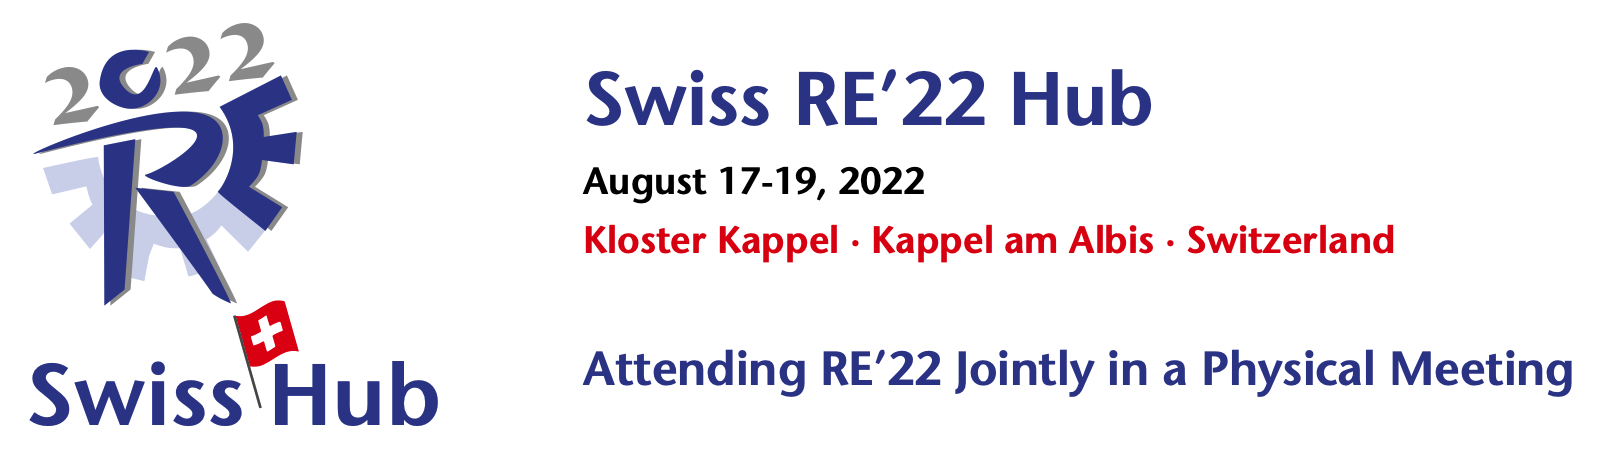 Swiss RE&#039;22 Hub Banner